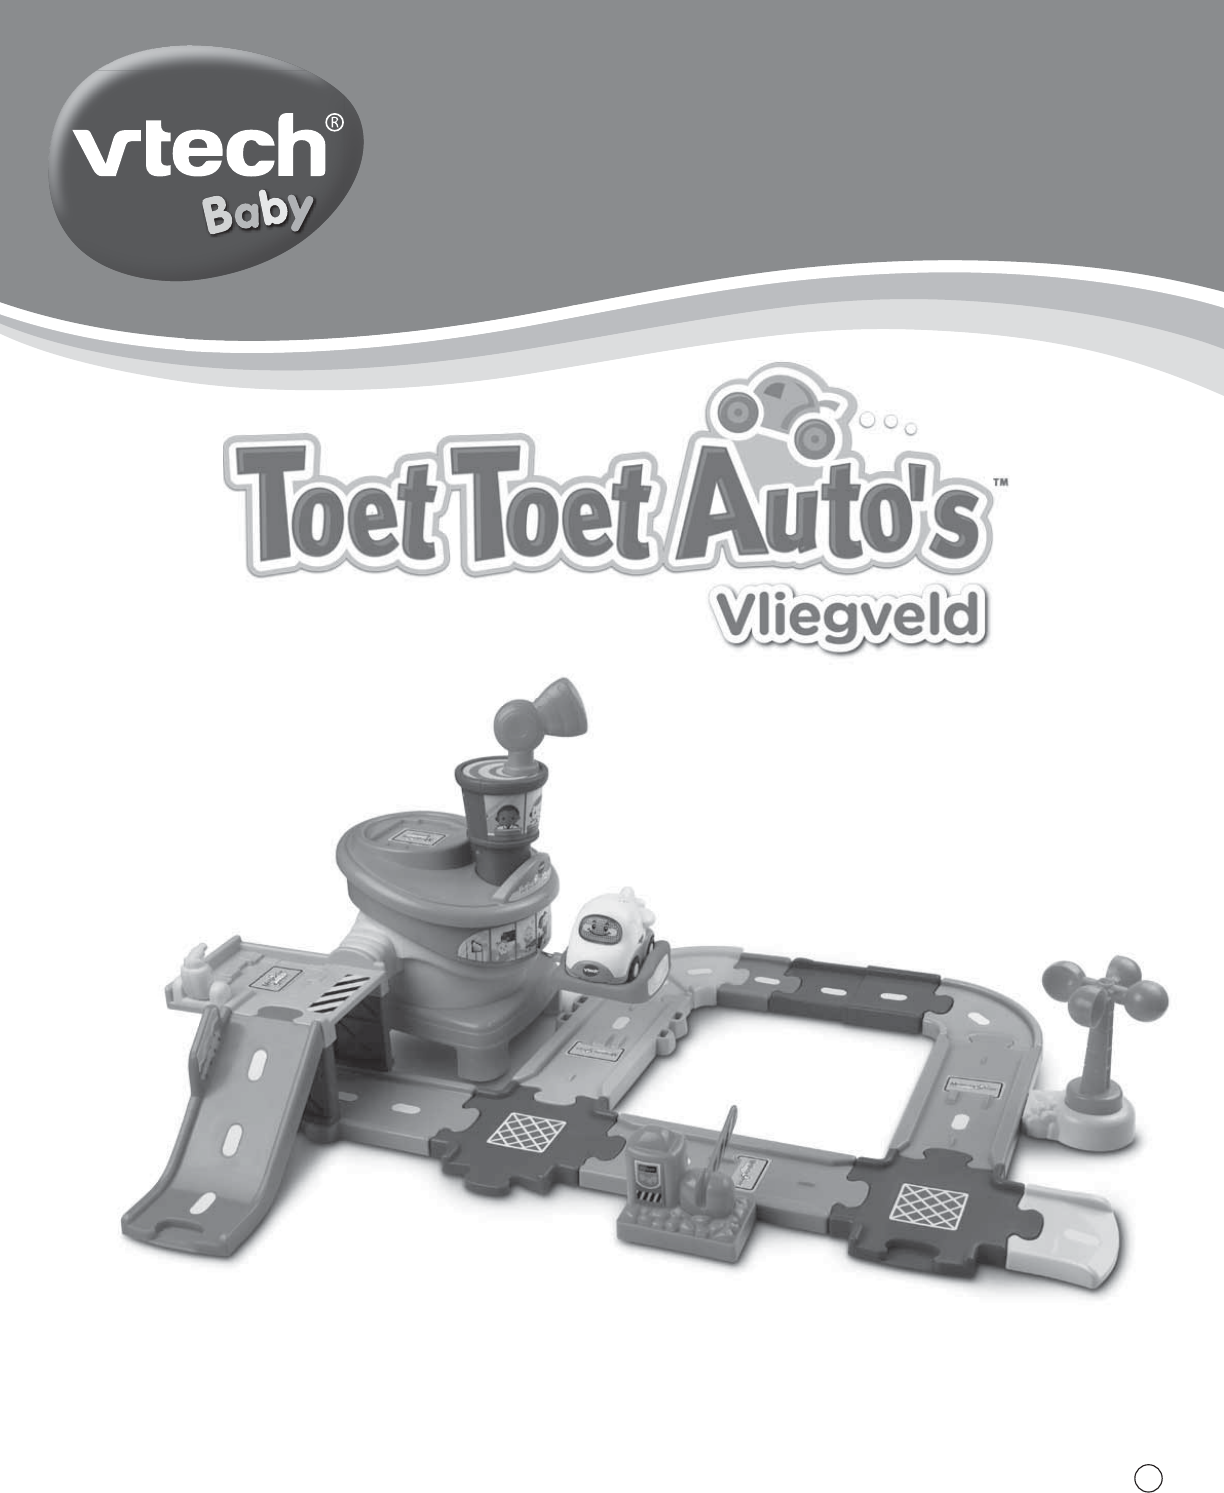 Manual VTech Auto Vliegveld (page 1 of 14) (Dutch)